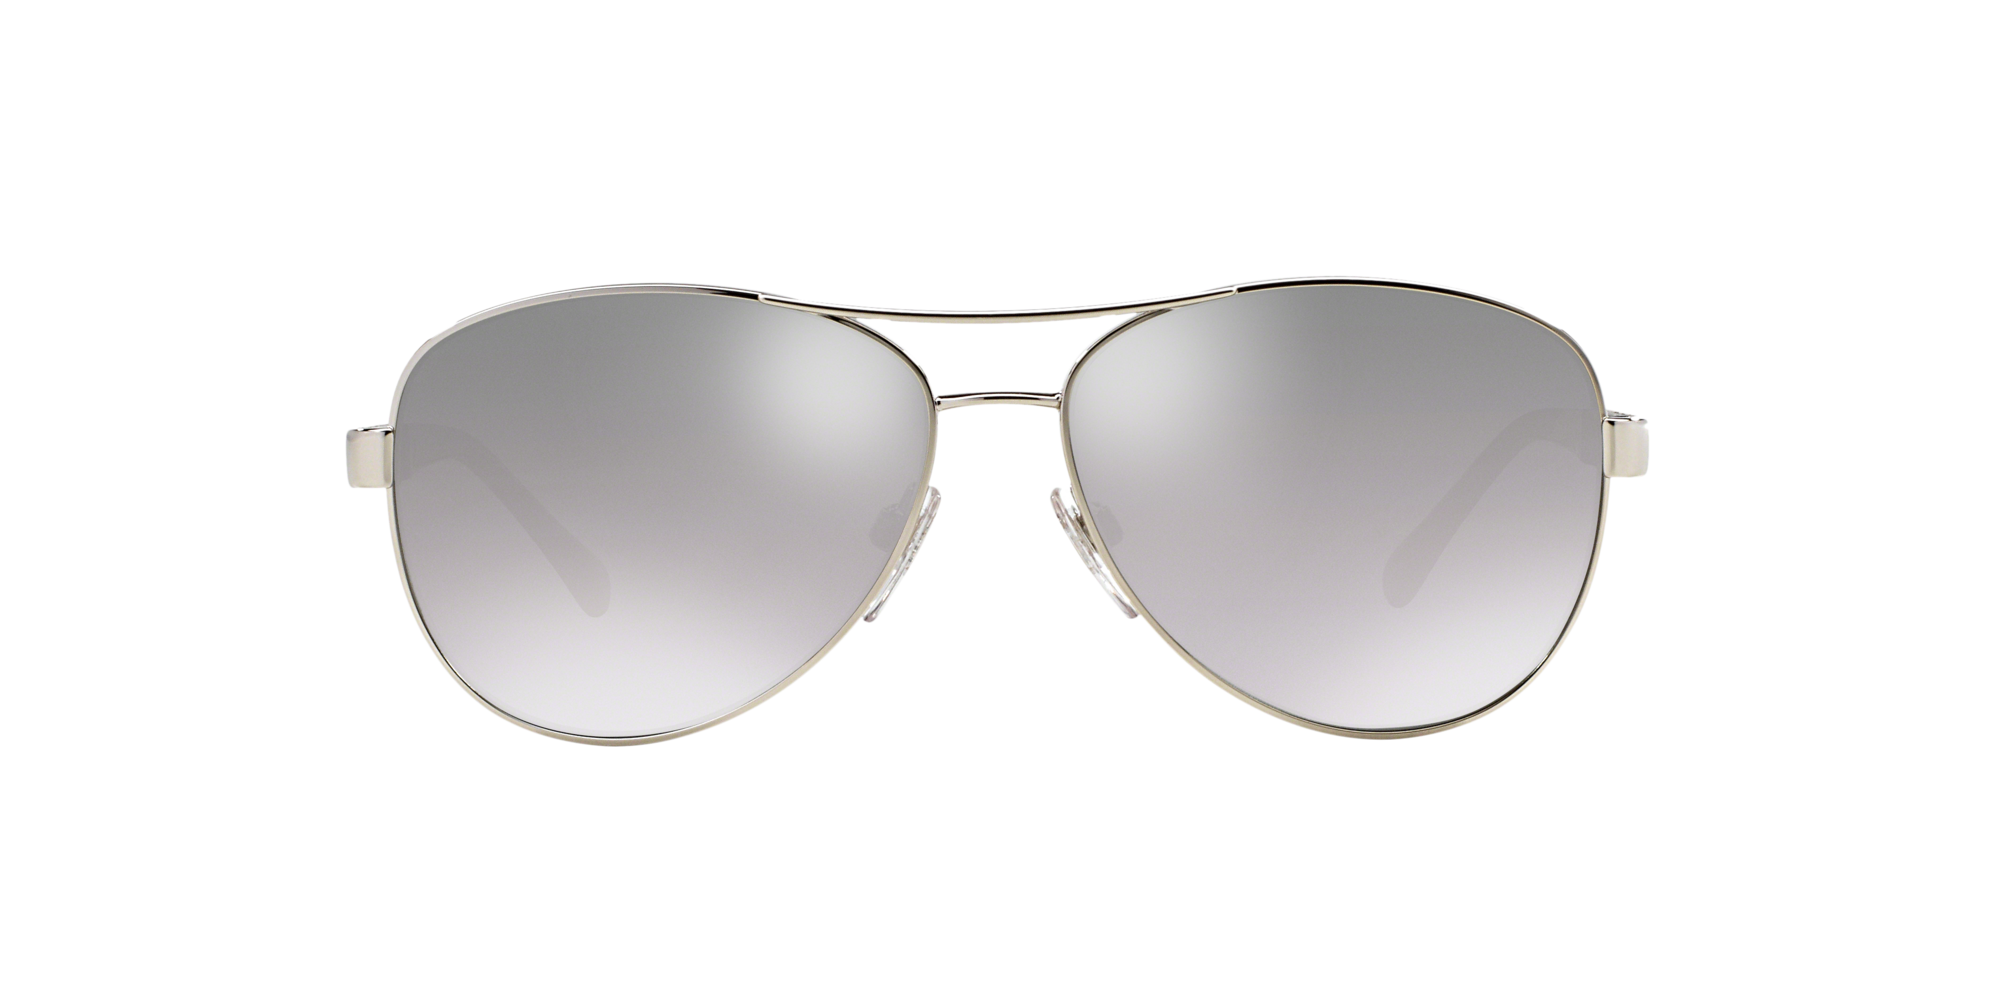 burberry sunglasses be3080